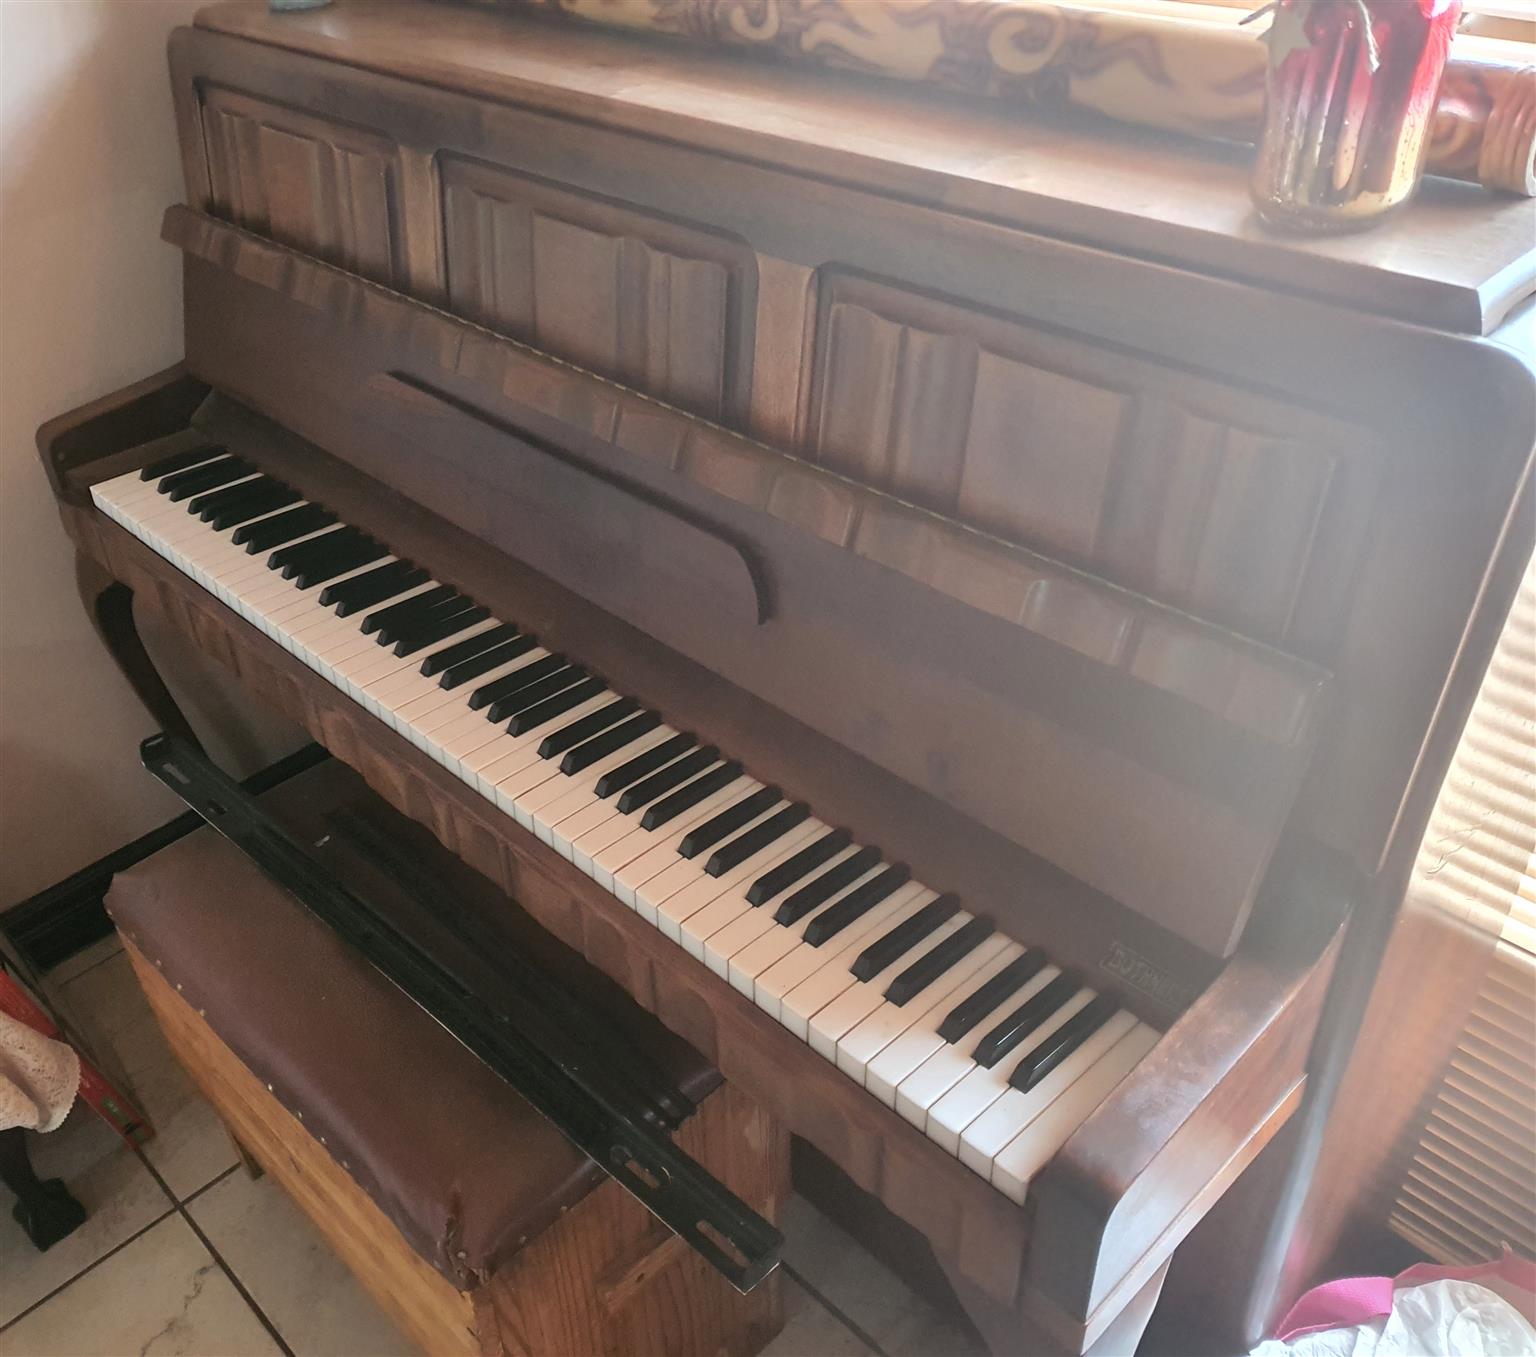 Knight Piano for sale